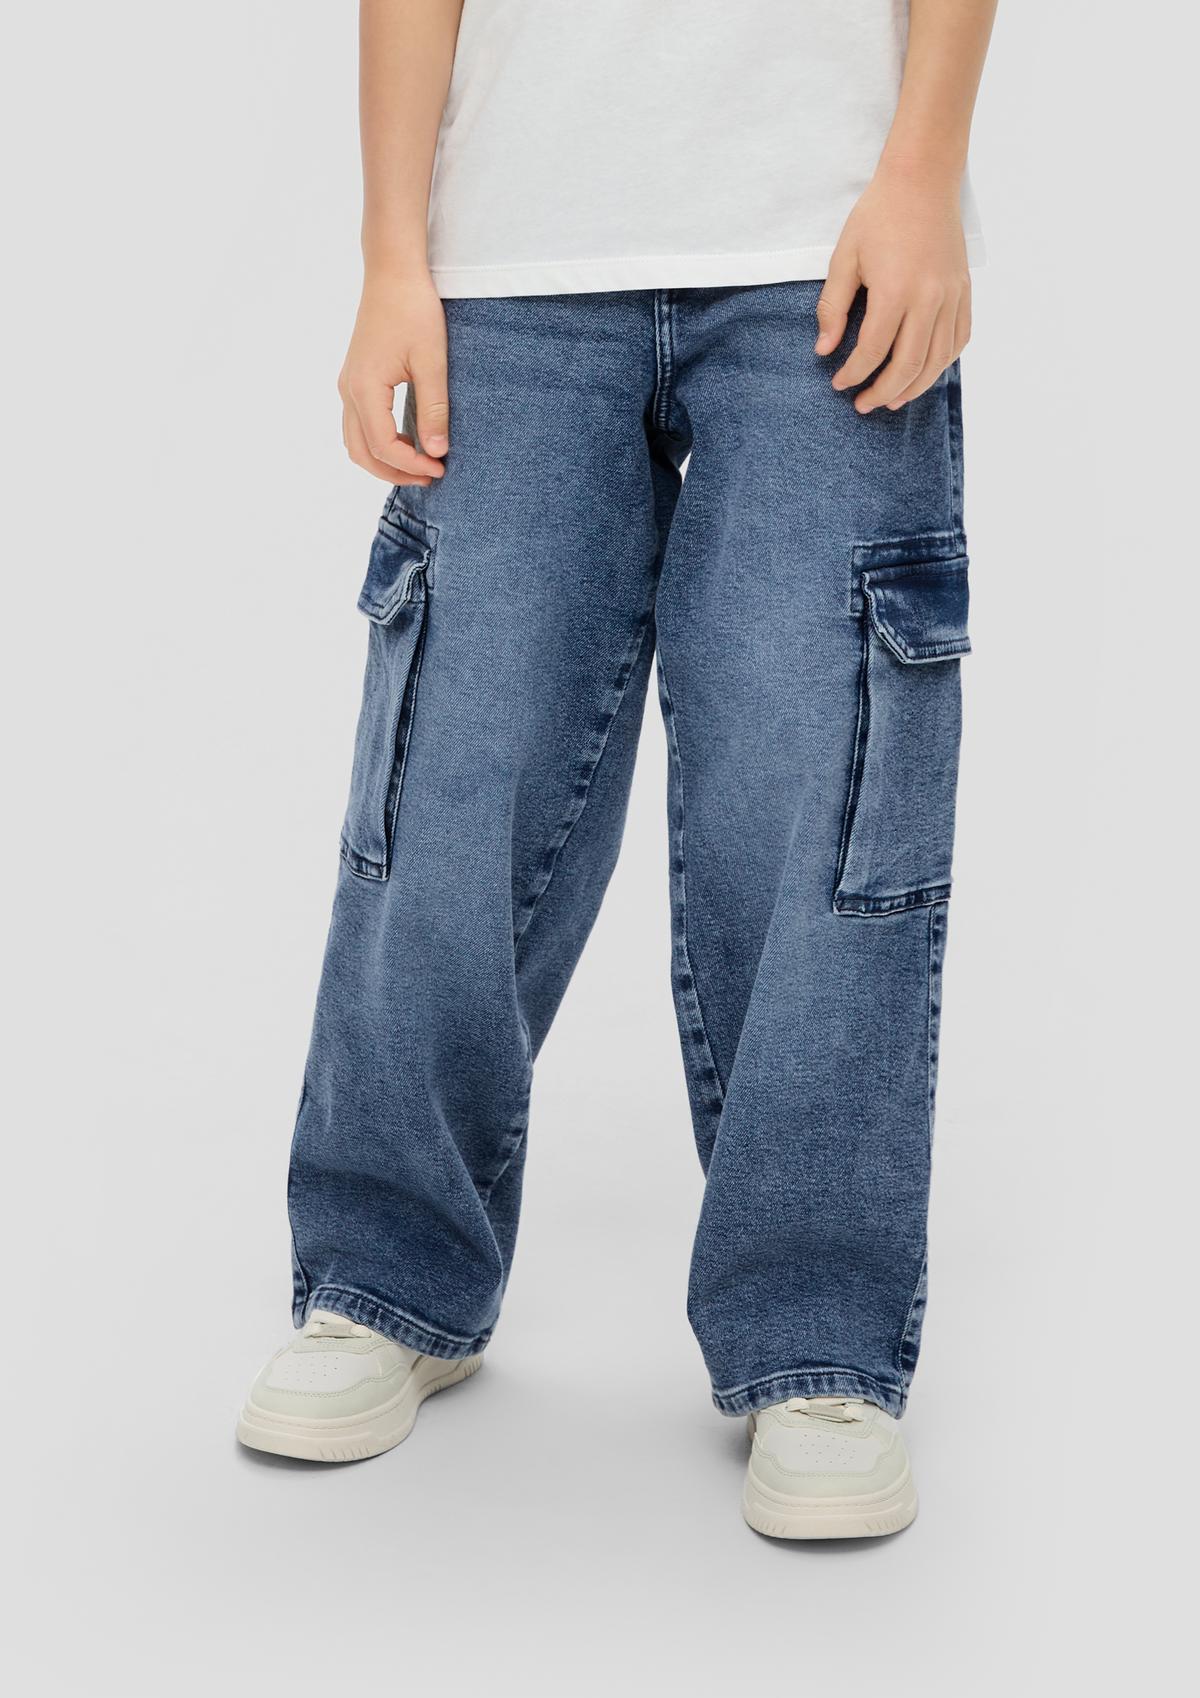 Jeans / Regular fit / Mid rise / Slim leg